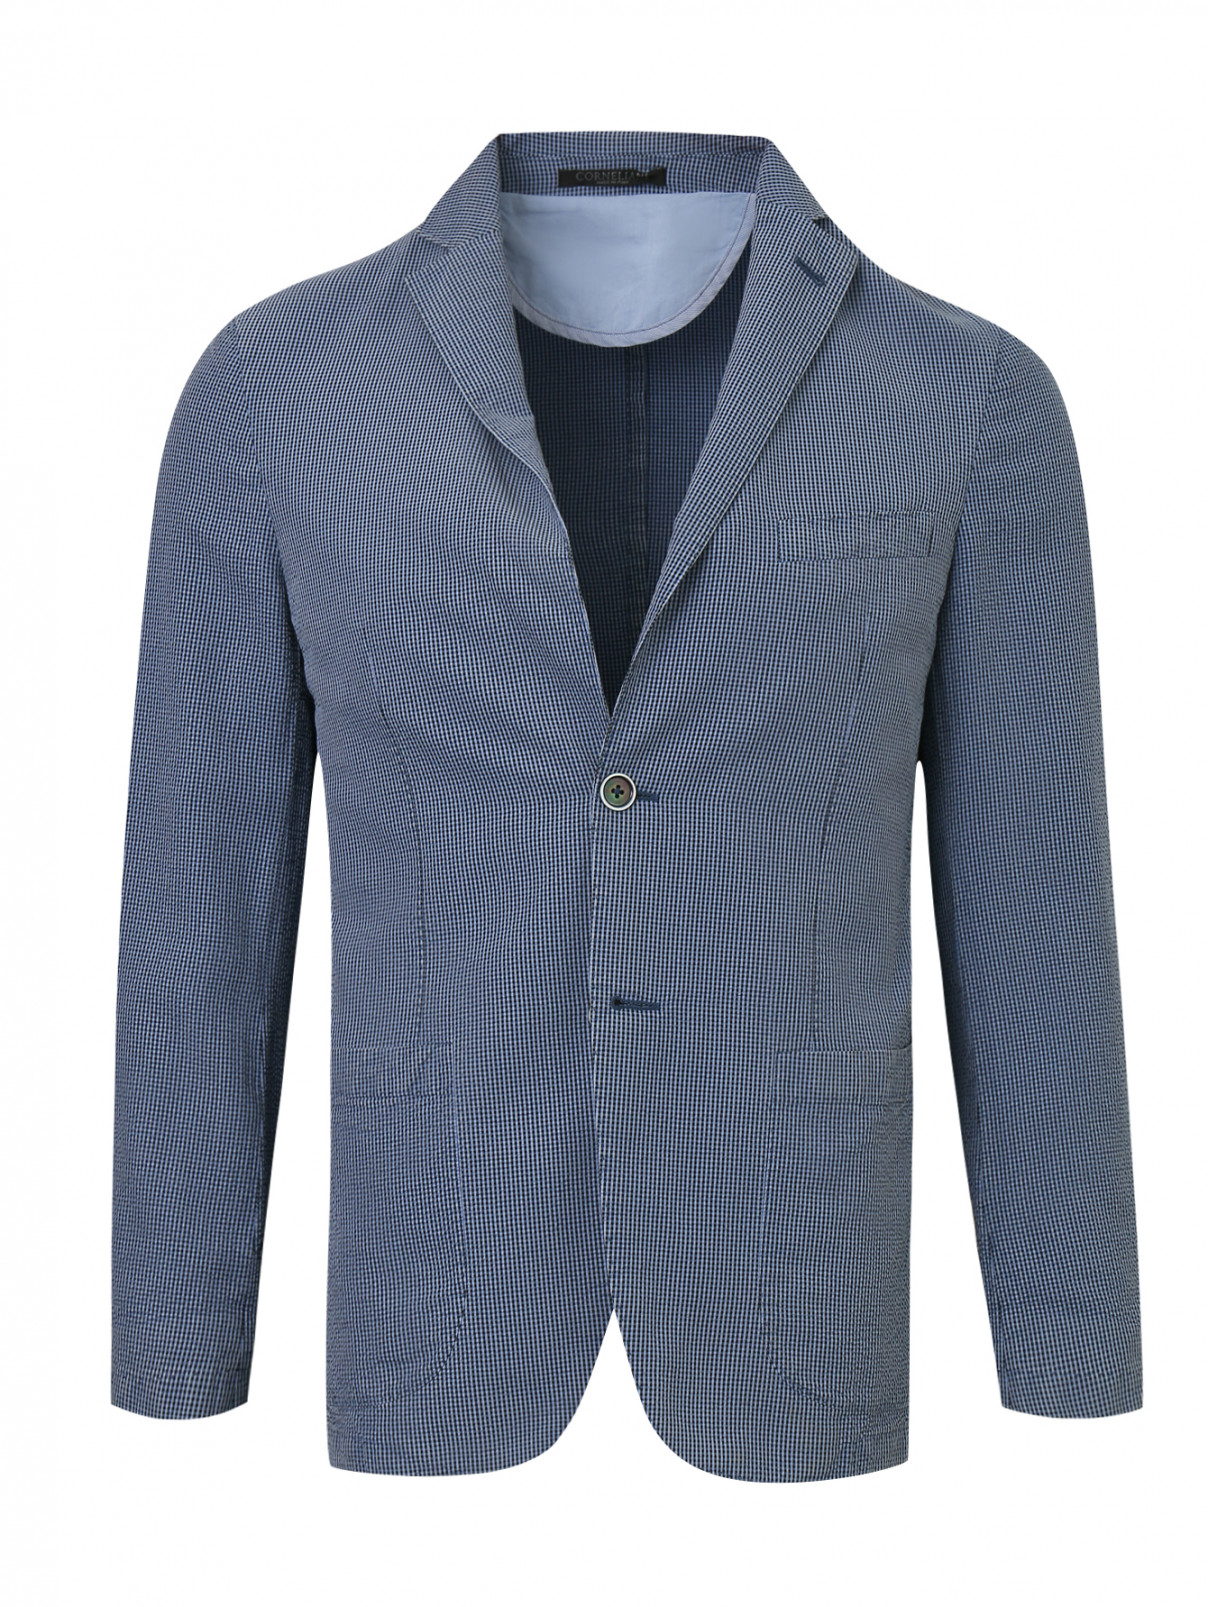 Пиджак из шелка с узором Corneliani ID  –  Общий вид  – Цвет:  Синий